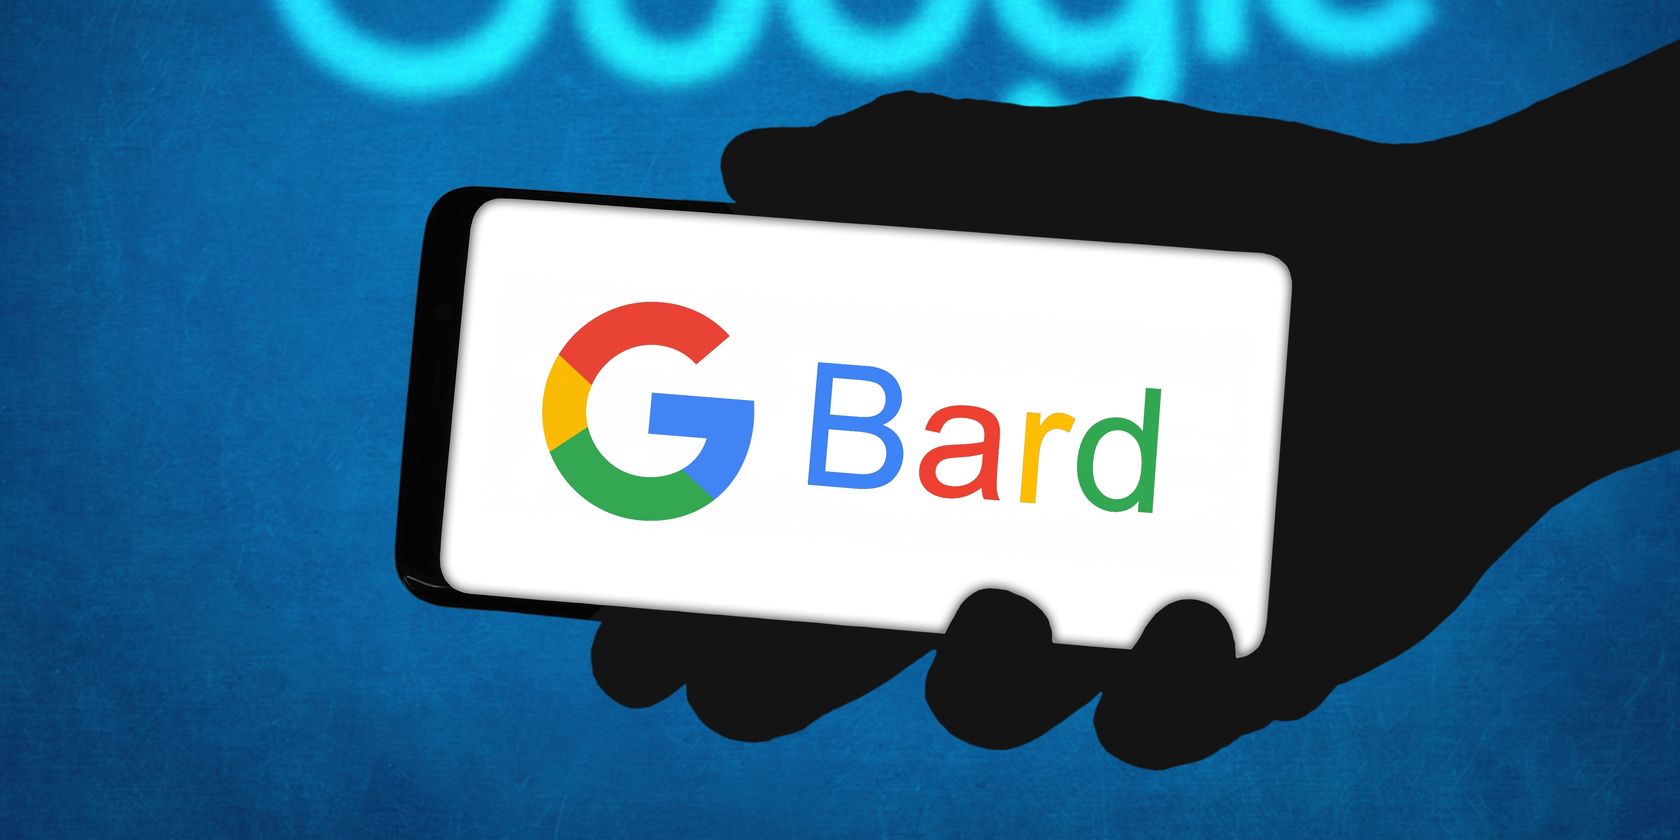 google bard logo on smartphone screen feature